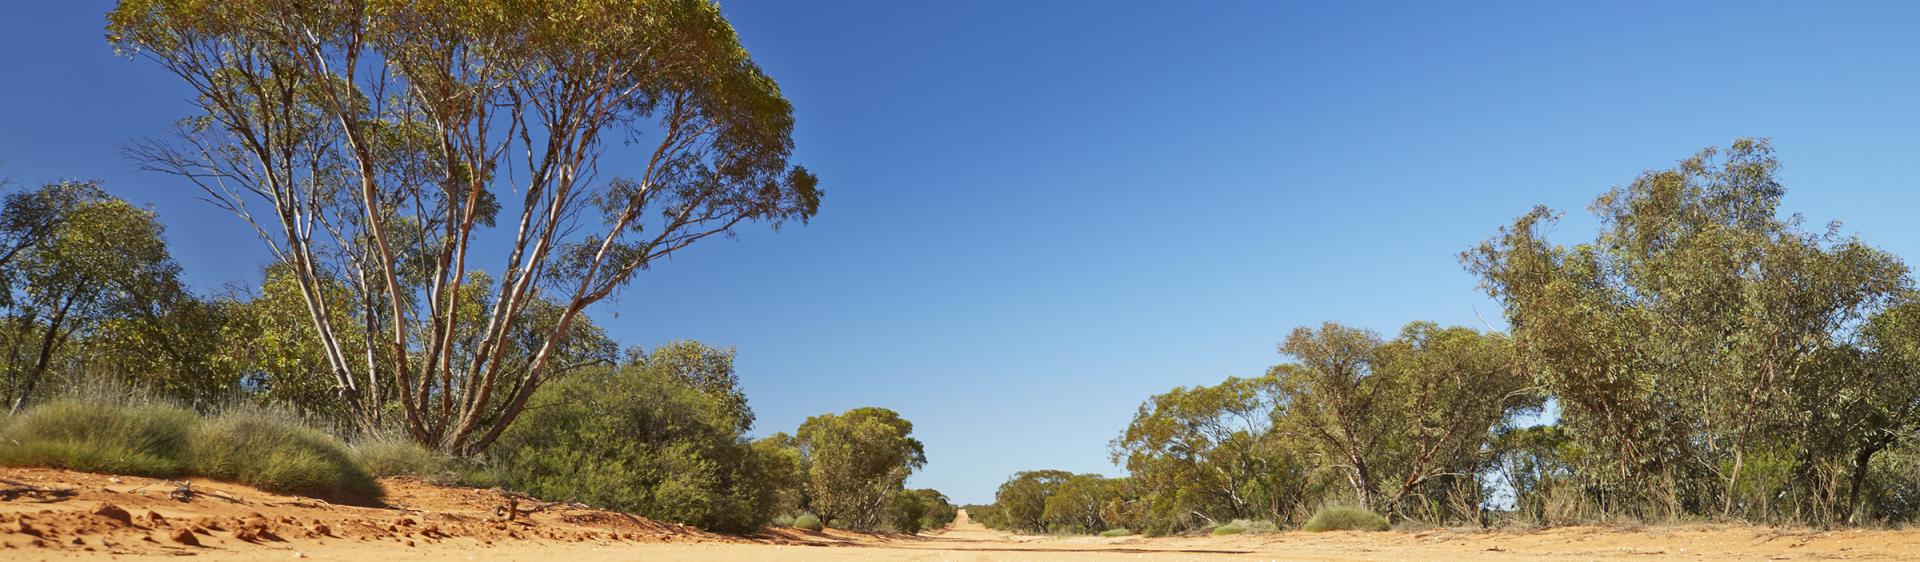 Mungo National Park track, Broken Hill